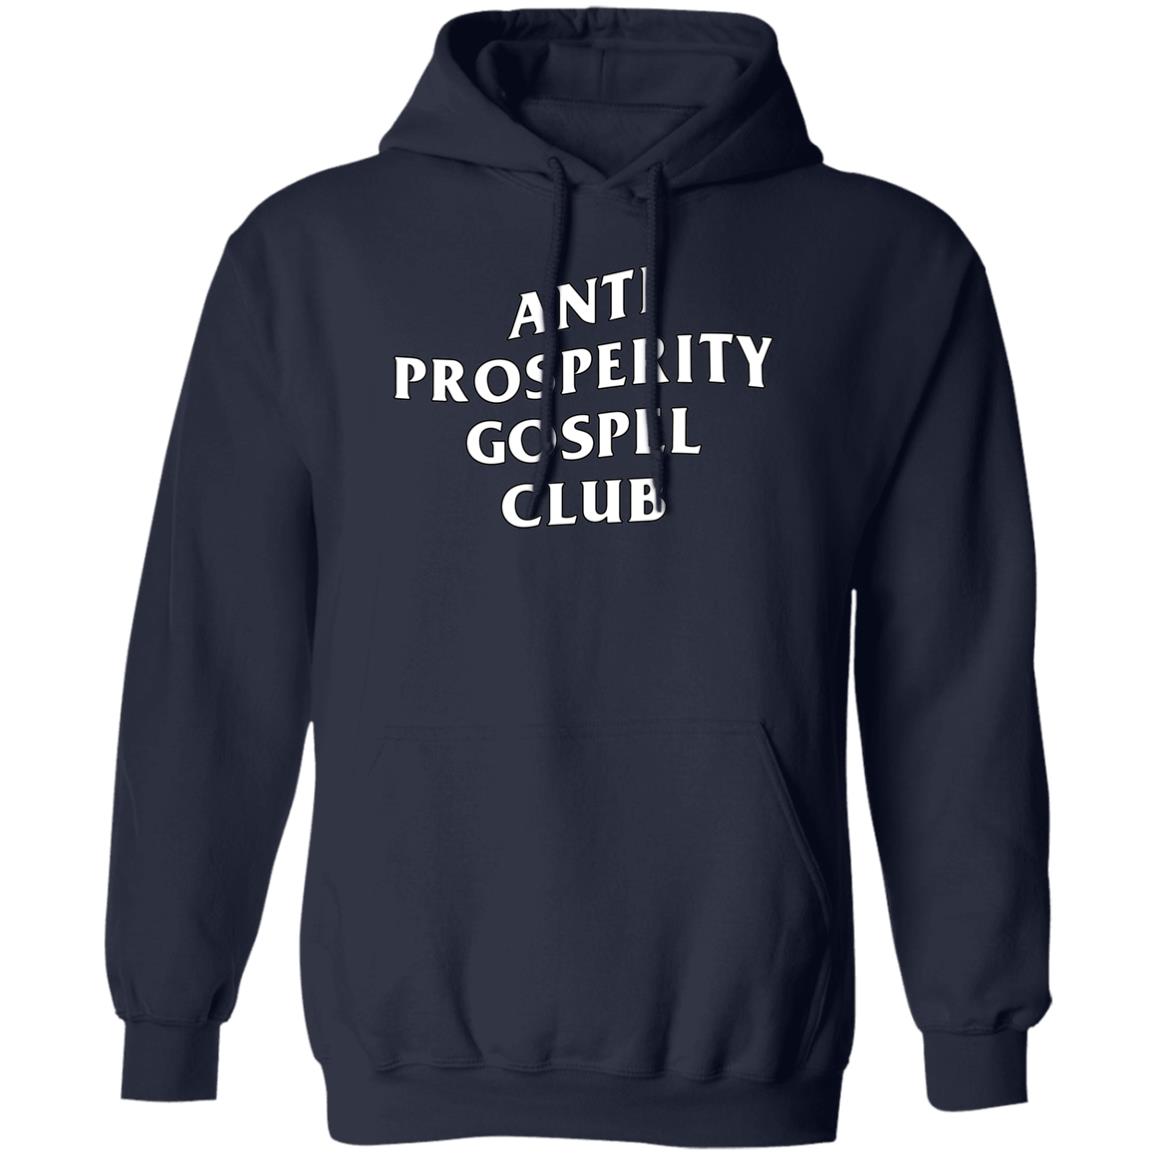 Anti Prosperity Gospel Club (Unisex Hoodie)